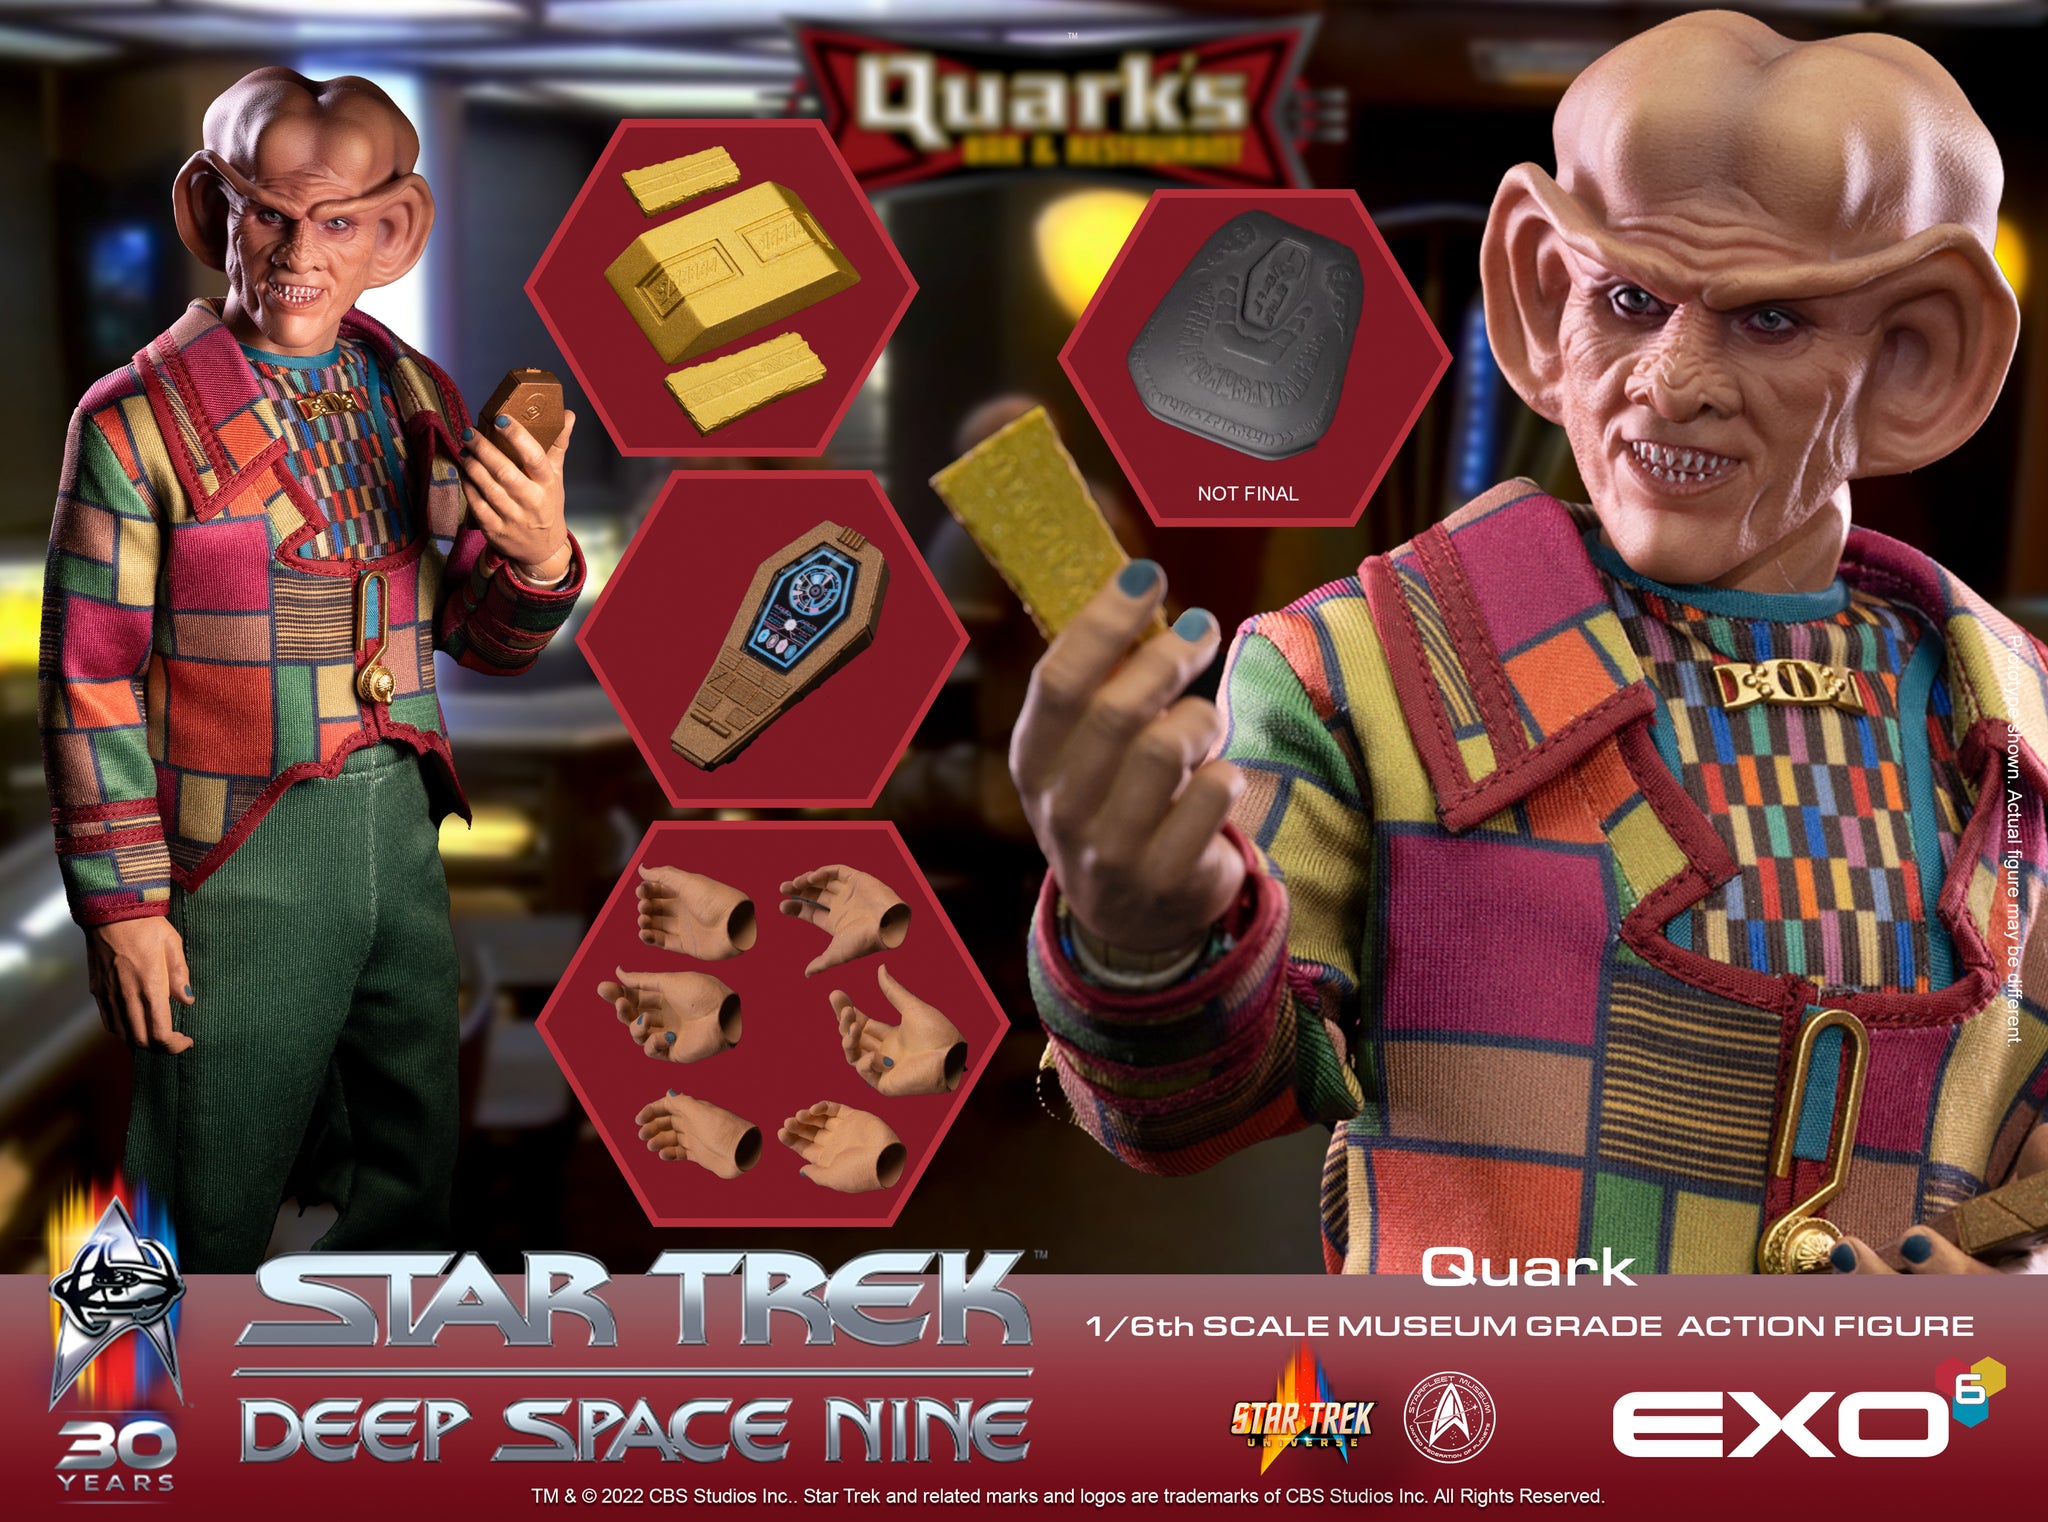 NEW PRODUCT: EXO-6 1/6 Star Trek Deep Space Nine QUARK Quark_montages_1024x1024@2x